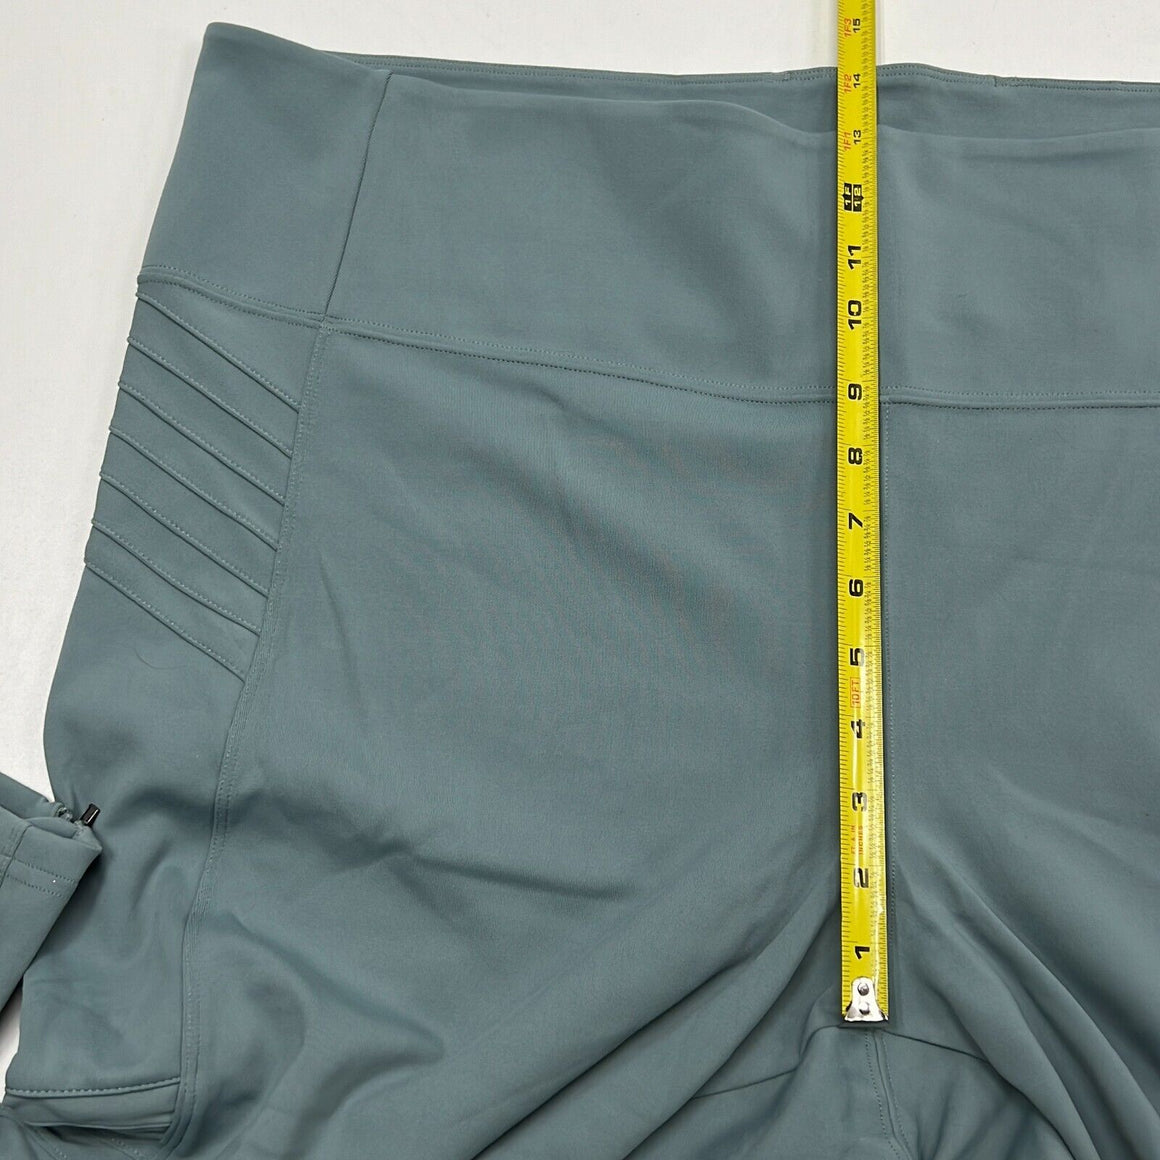 Athleta Delancey Moto Tight Women's Activewear Pants - Black, Size: S  (598323) for sale online